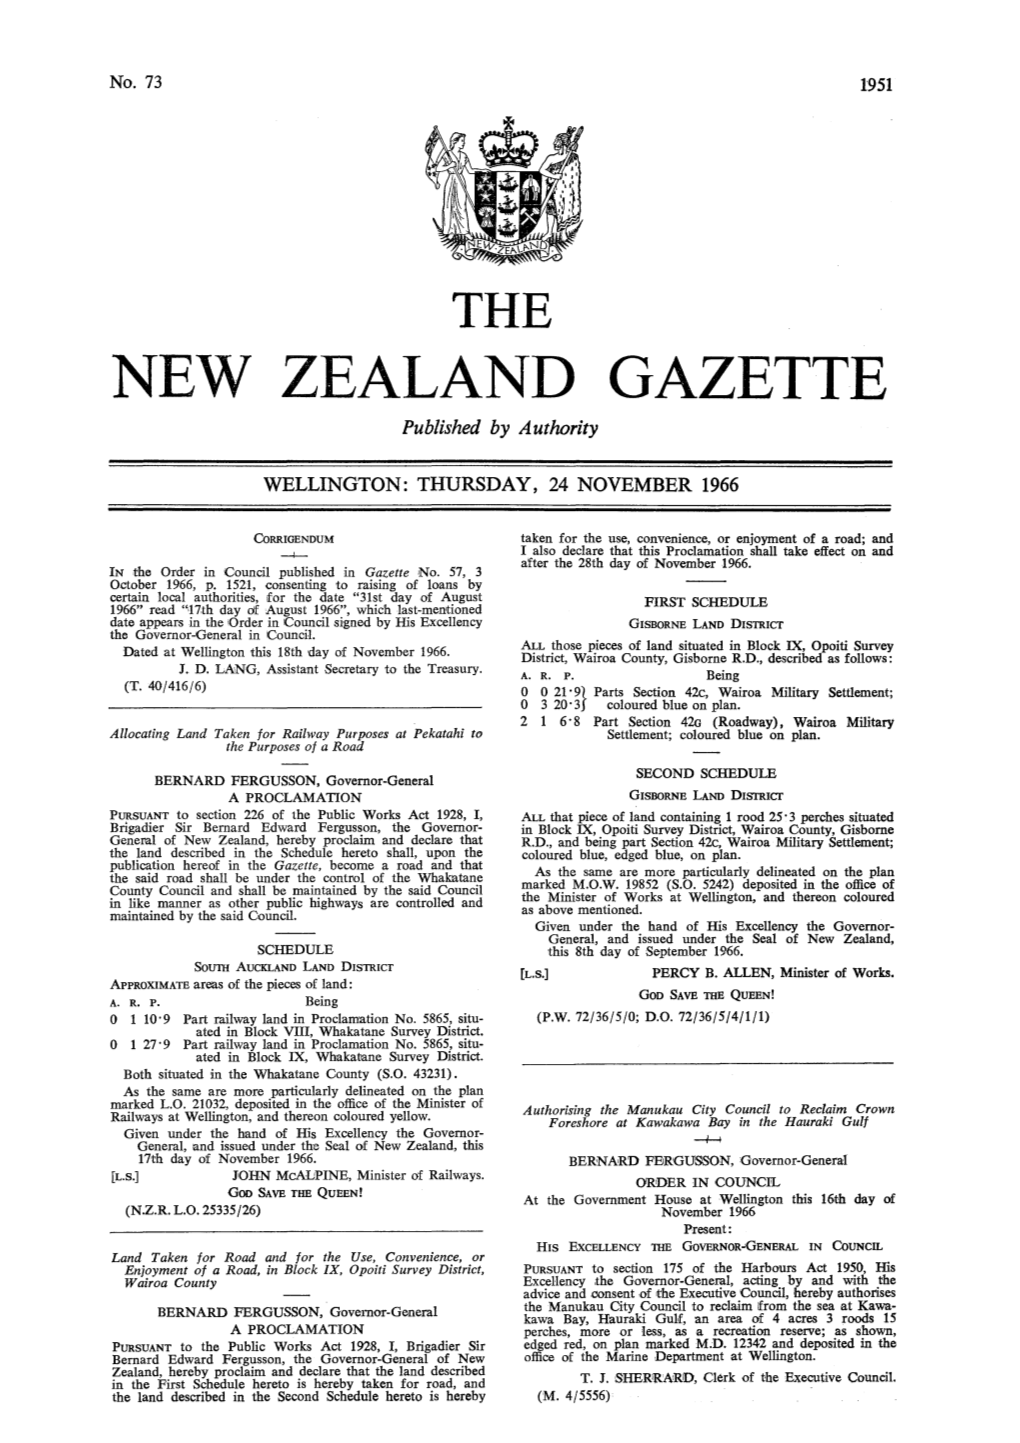 No 73, 24 November 1966, 1951